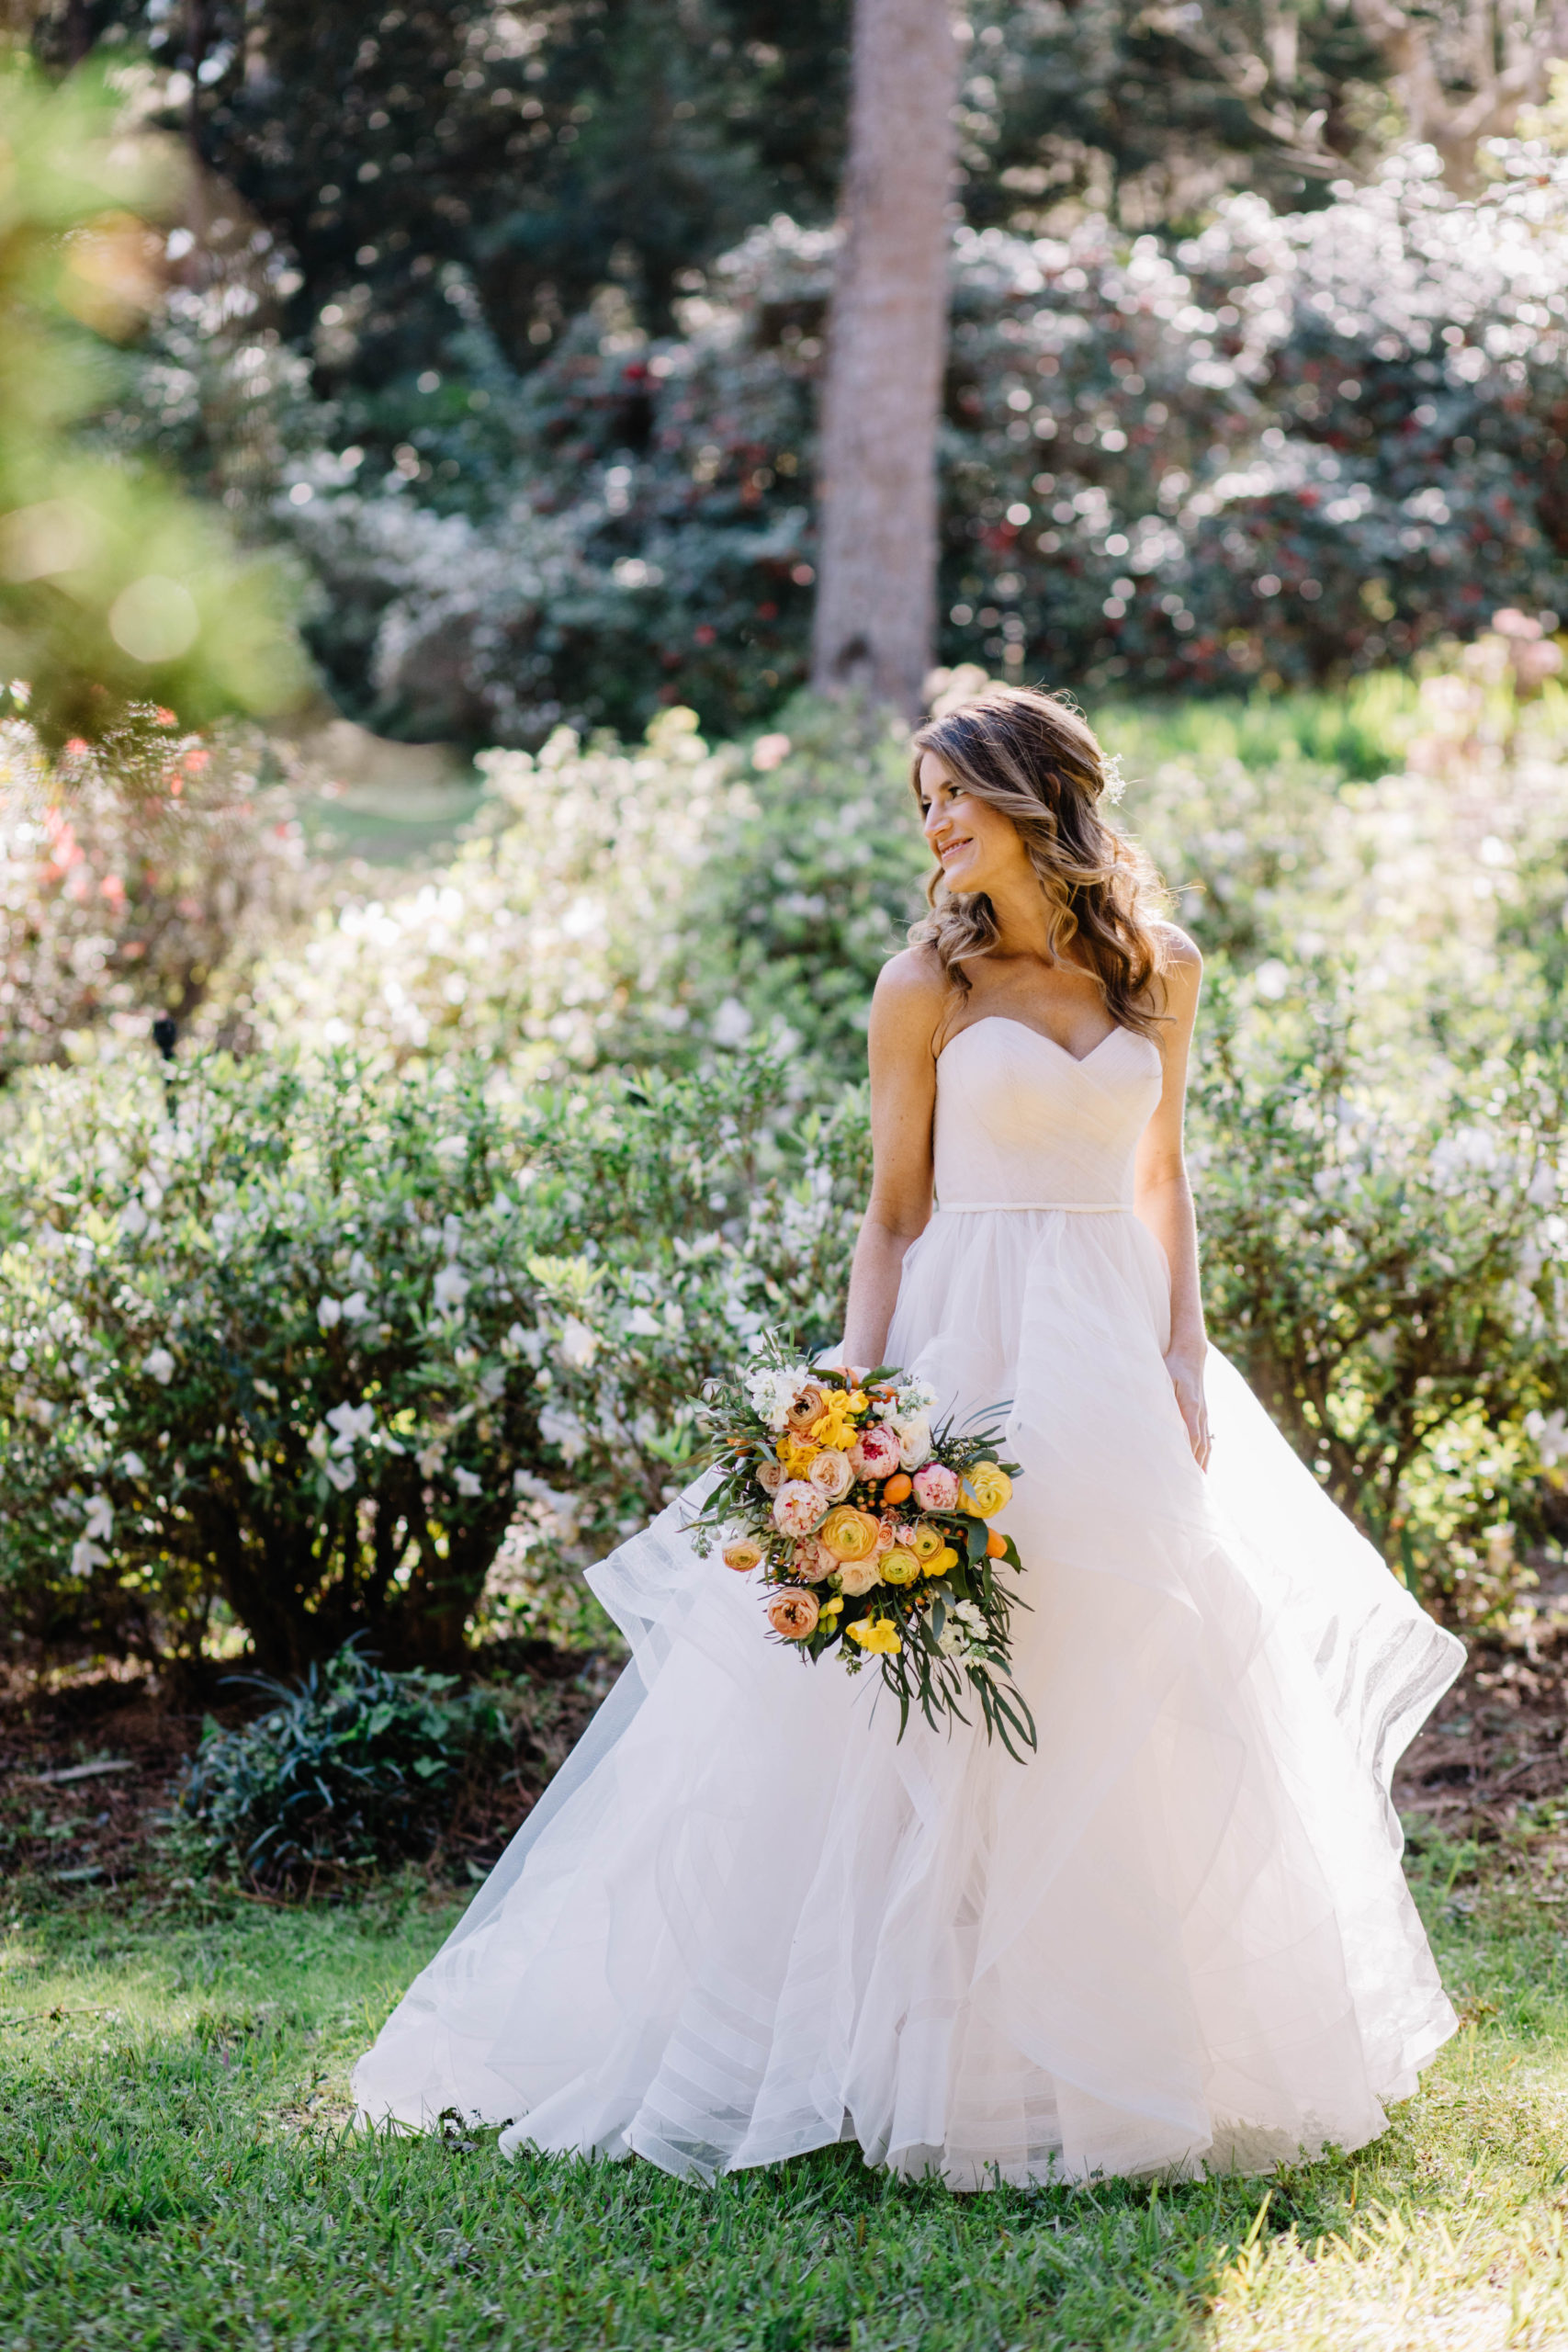 Tallahassee Maclay Gardens Wedding Photographer | Carolyn Allen Photography